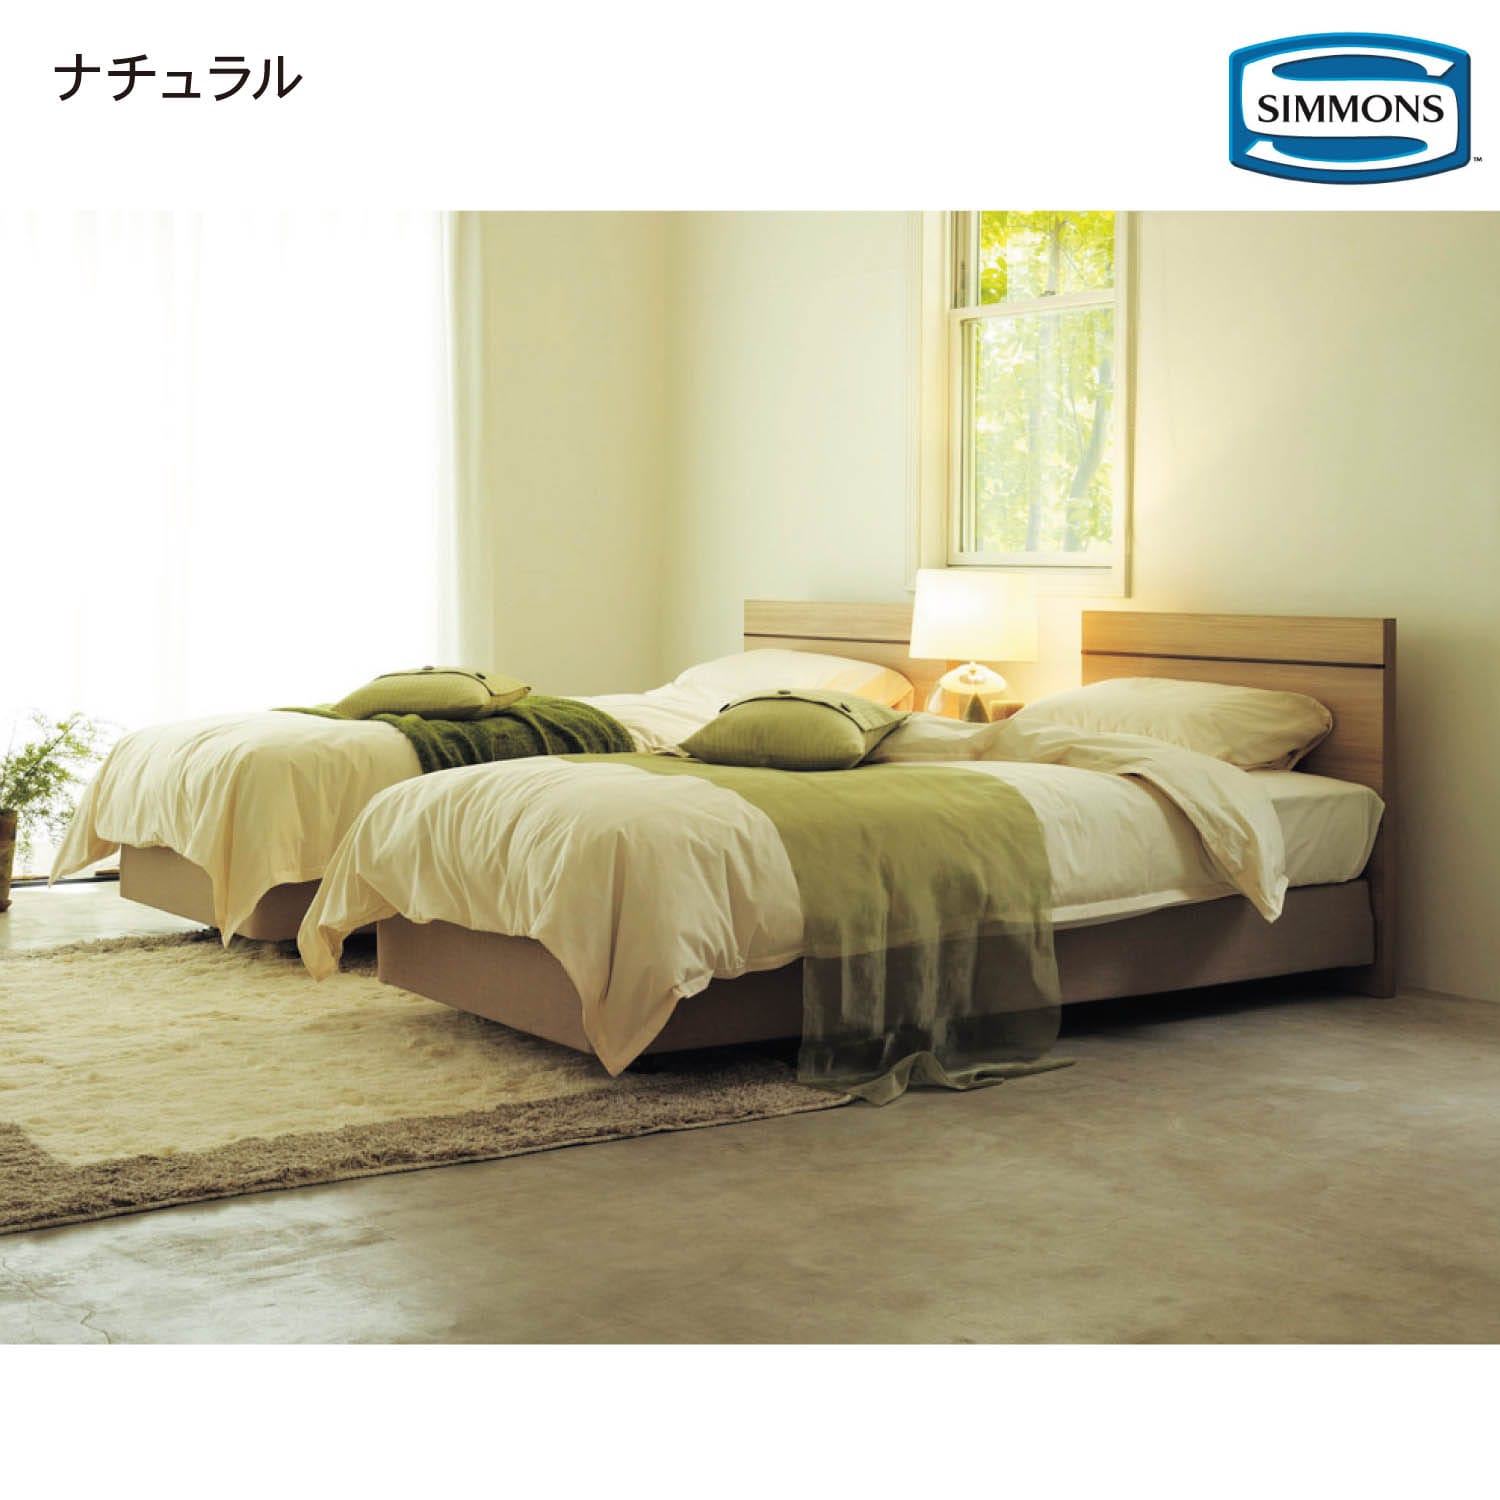 SIMMONS❗️最高級の寝心地❗️美品❗️】定価¥172,000 SIMMONS×ナフコ